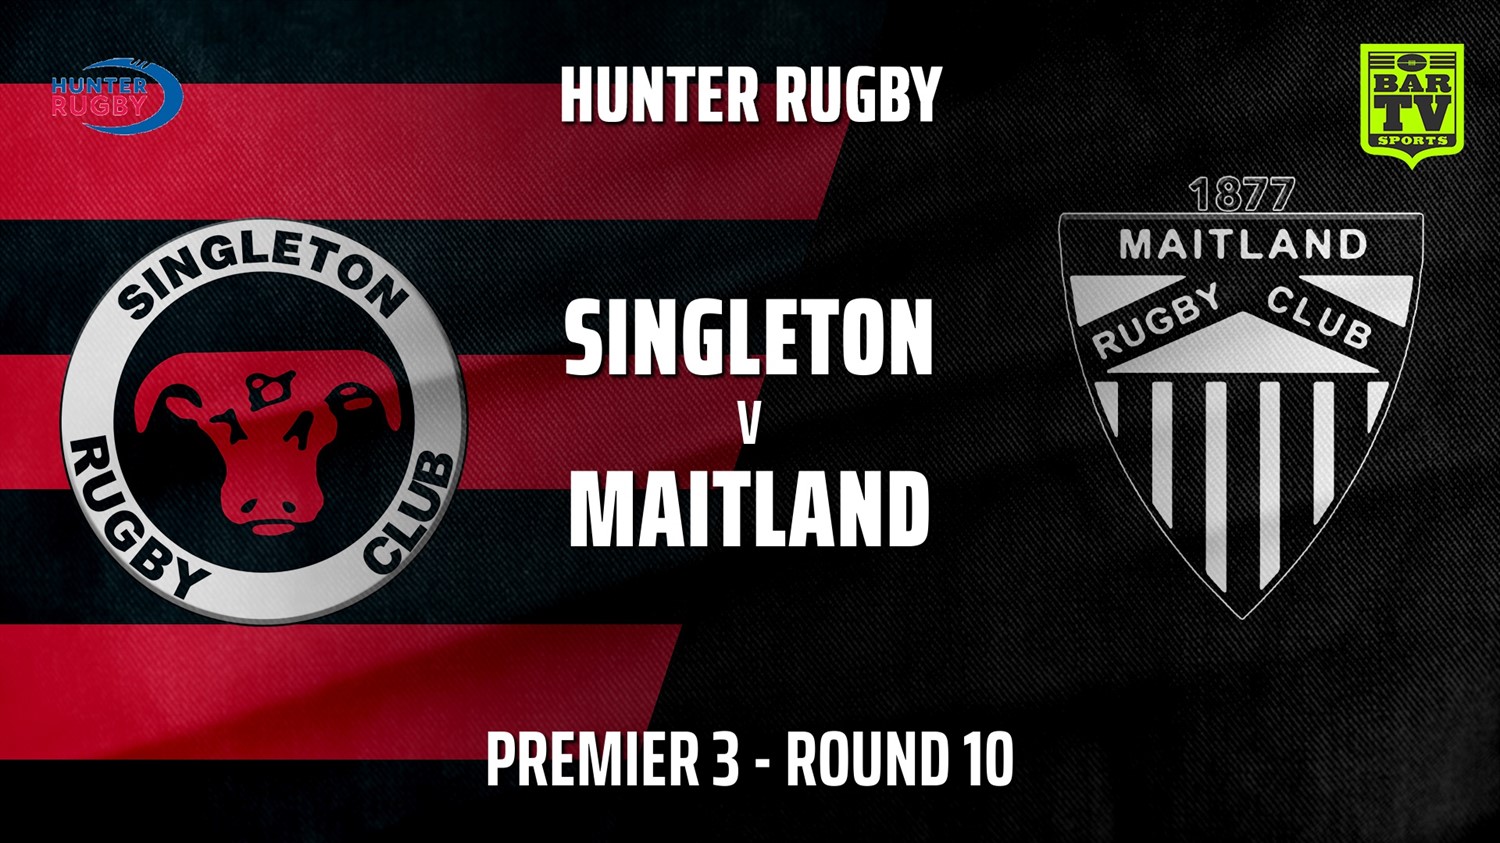 210626-Hunter Rugby Round 10 - Premier 3 - Singleton Bulls v Maitland Slate Image